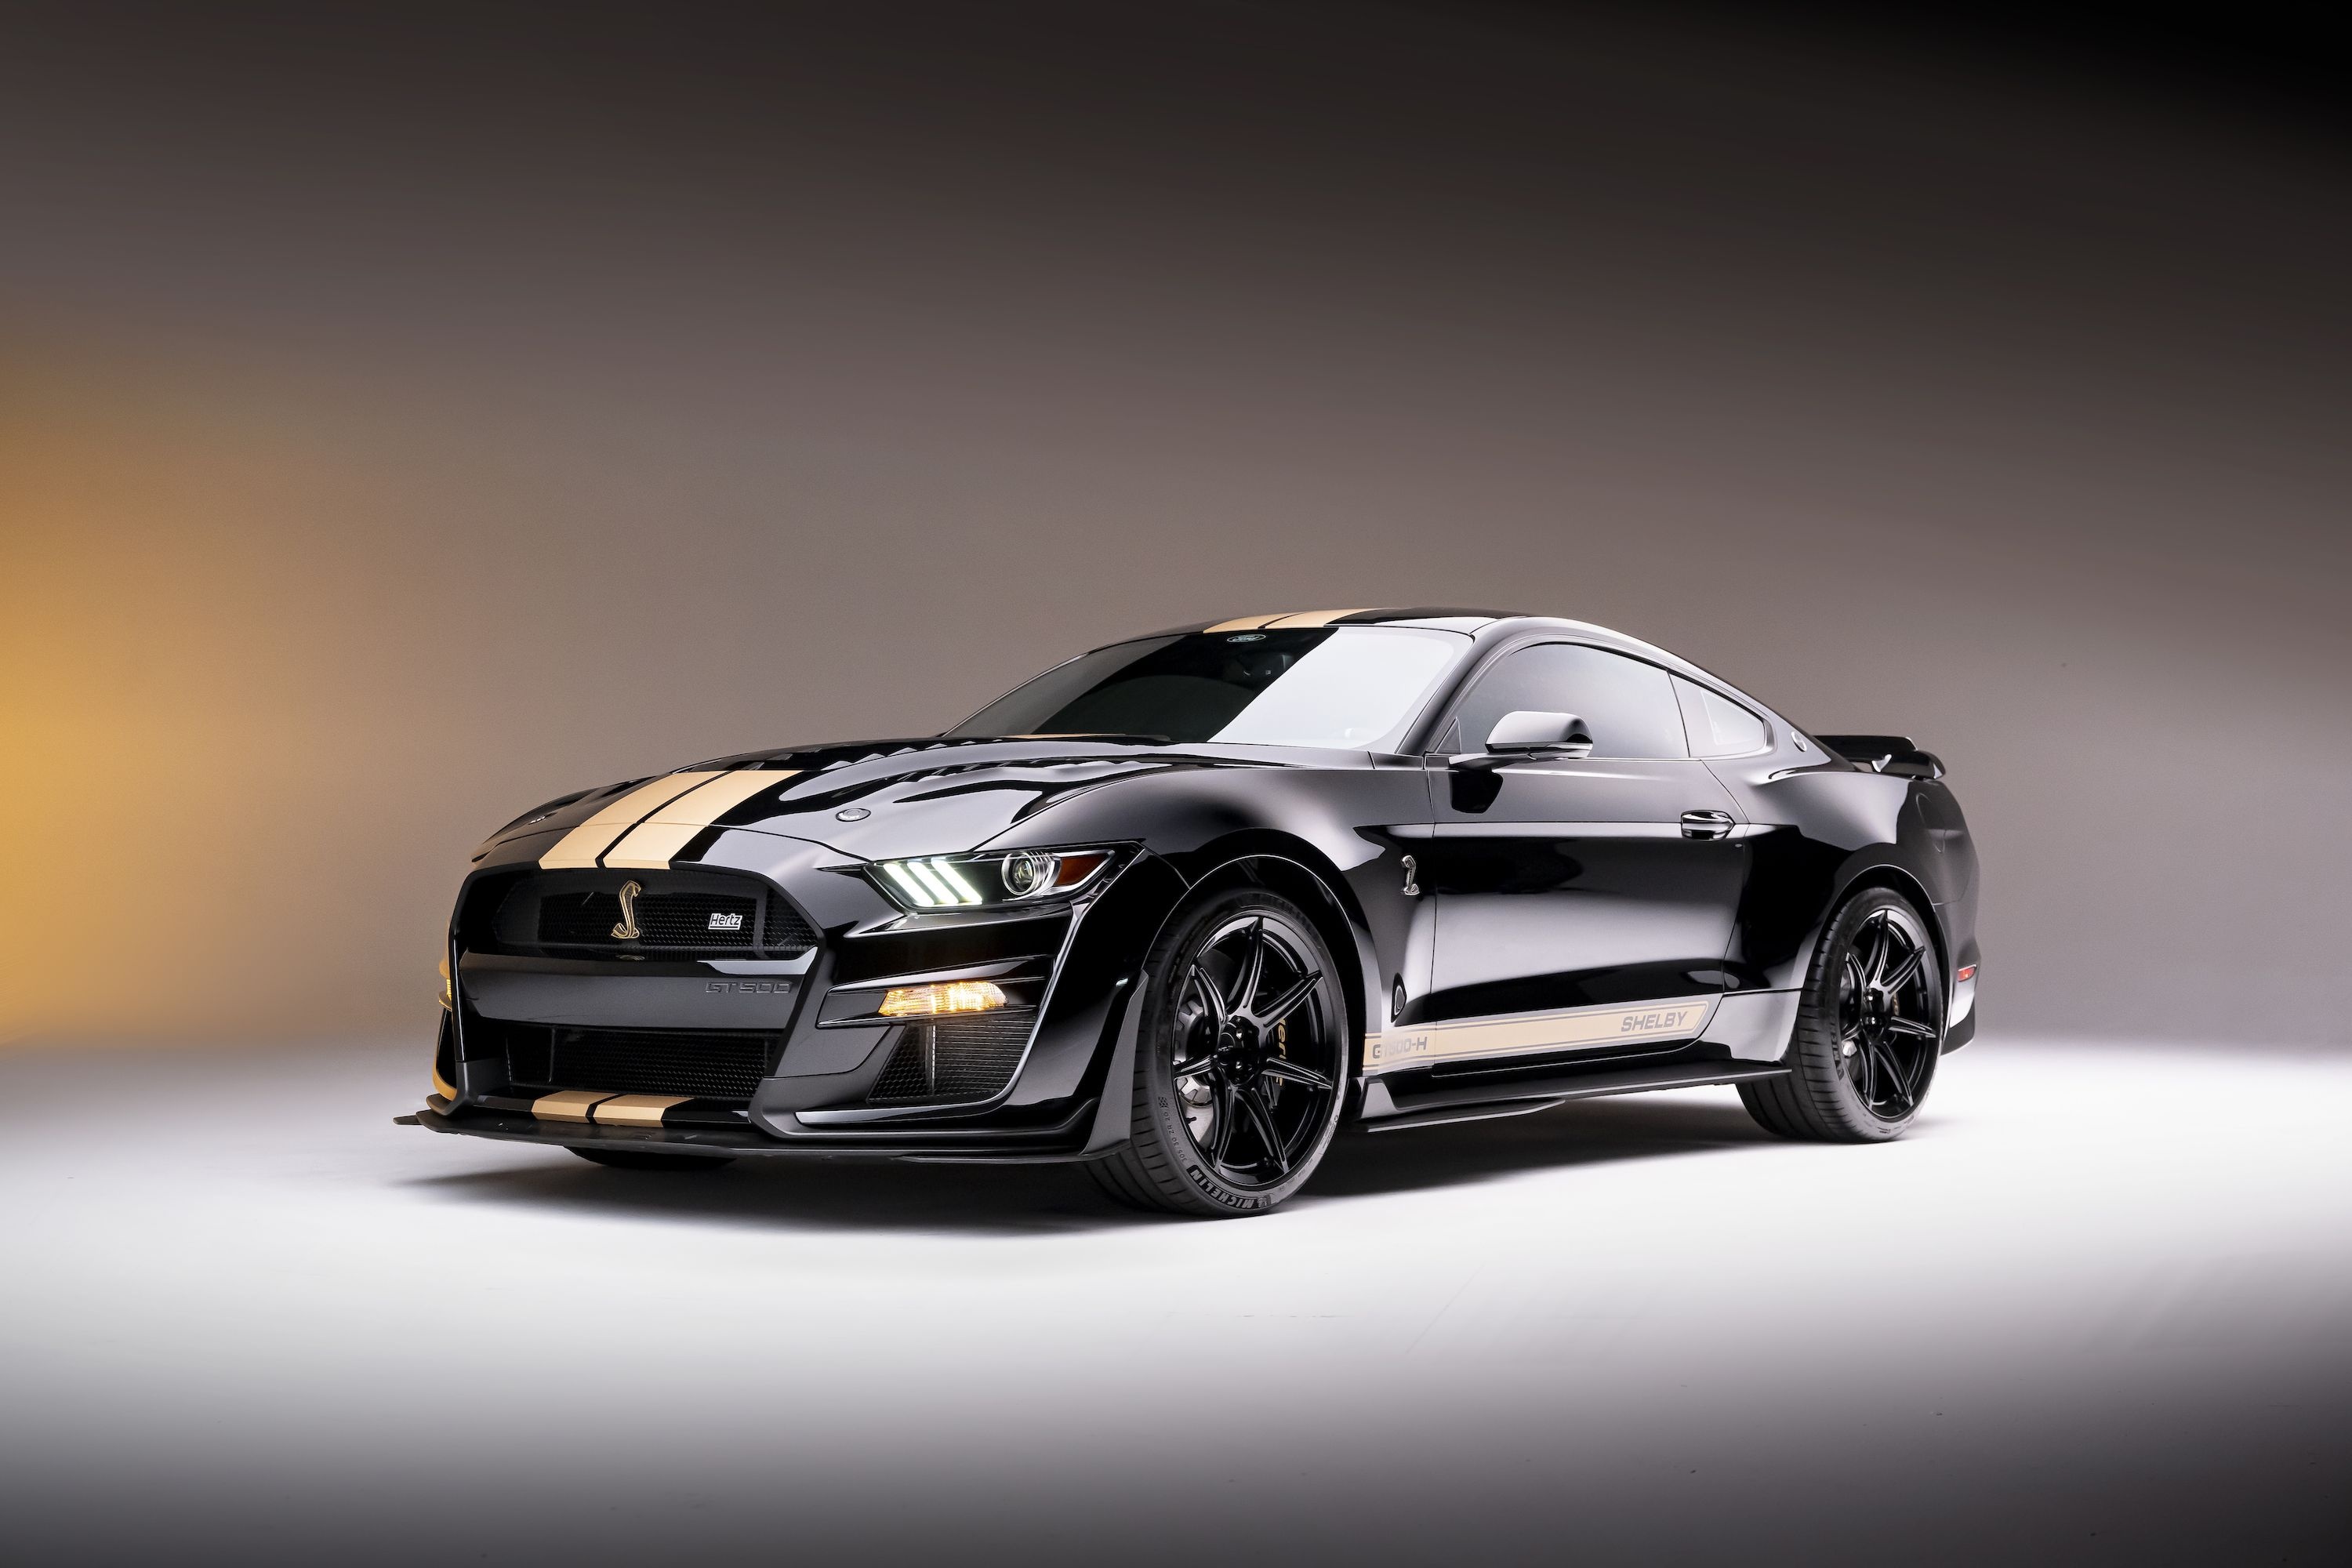 Shelby Mustang rental, Hertz special, 900 hp beast, High-octane driving, Limited edition, 3000x2000 HD Desktop